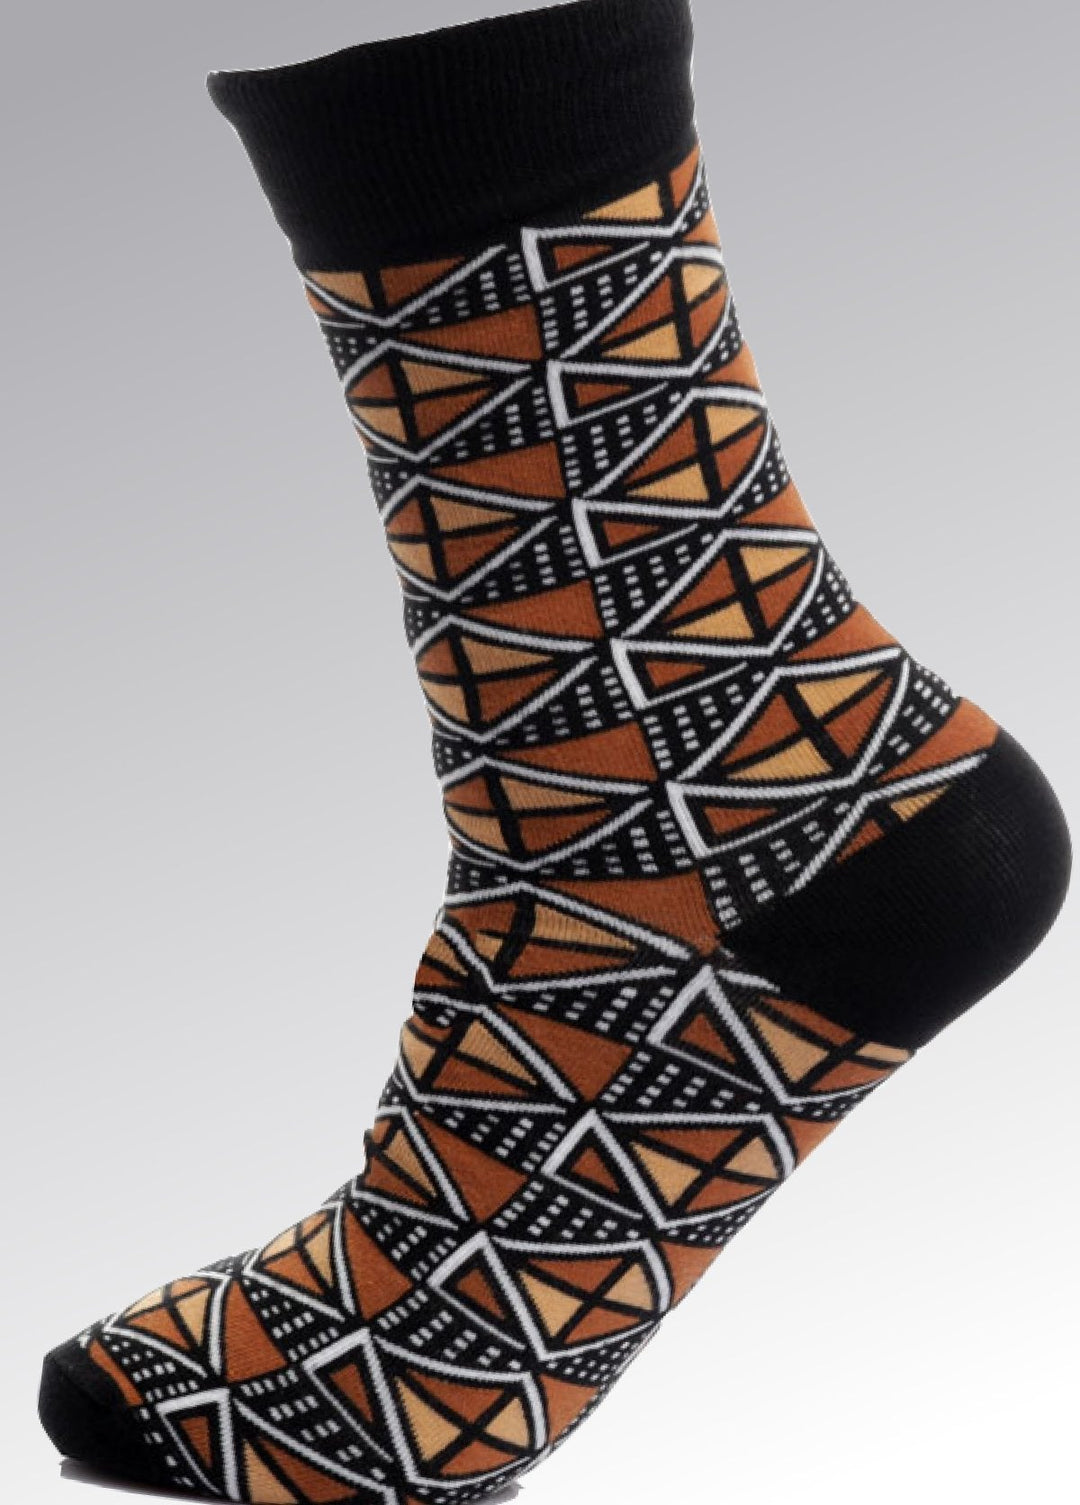 Socken aus Kenia ‚Kahawa‘ - mikono.africa Jacken aus Kenia bunte Bomberjacke Partyjacke faire sozial nachhaltig designed in Kenia